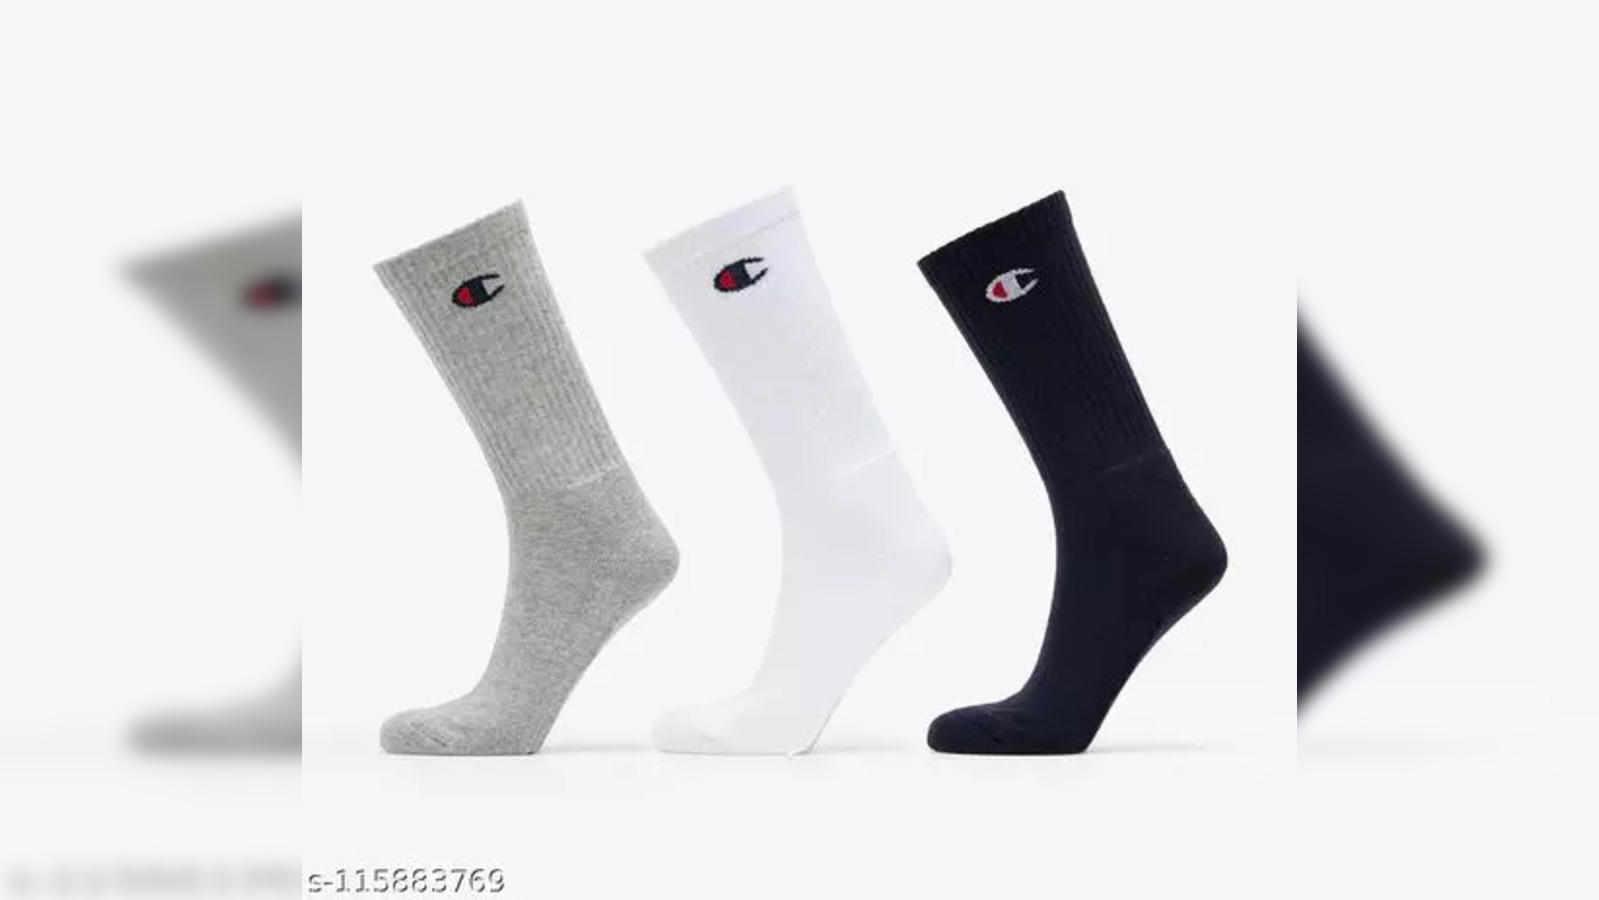 Supersox Socks for Men Ankle length